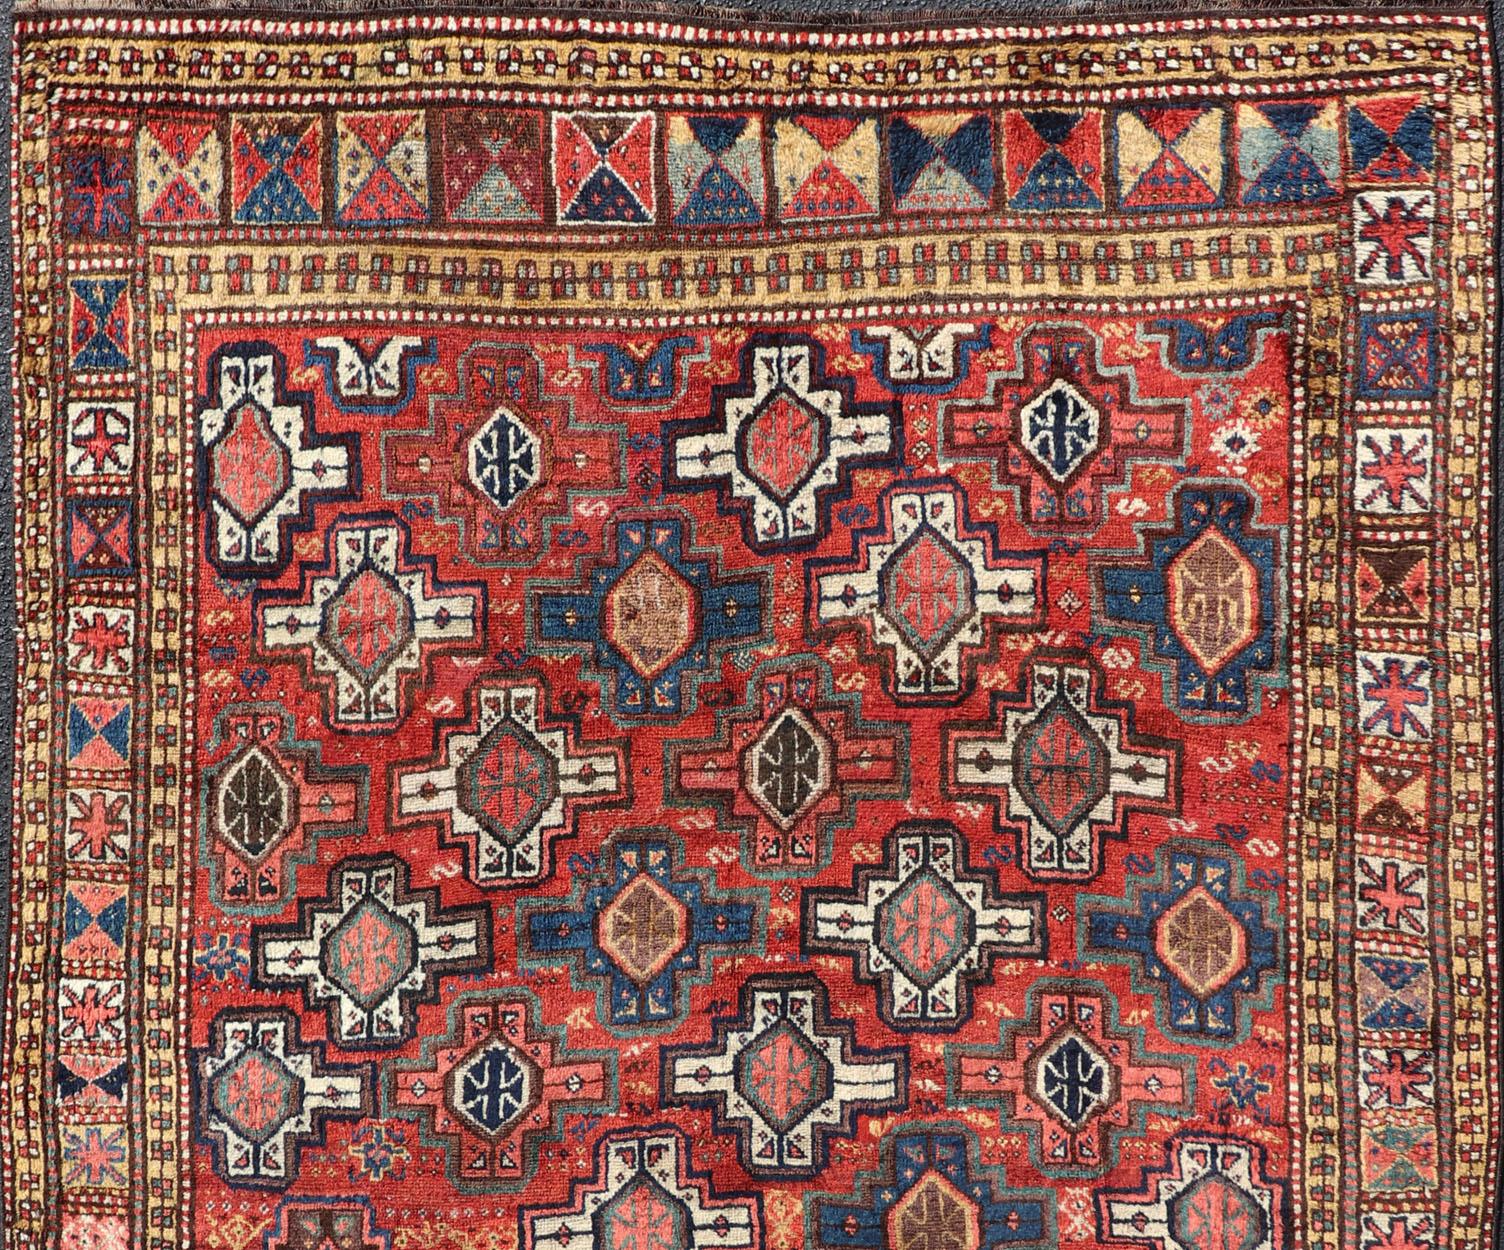 Antique Kazak Caucasian rug with all-over Tribal Design and repeating Medallions. Keivan Woven Arts / rug EMB-9673-P13565, country of origin / type: Caucasus / Kazak, circa 1900. 
Measures: 5'8 x 8'9 
This late 19th-century treasure is rendered in